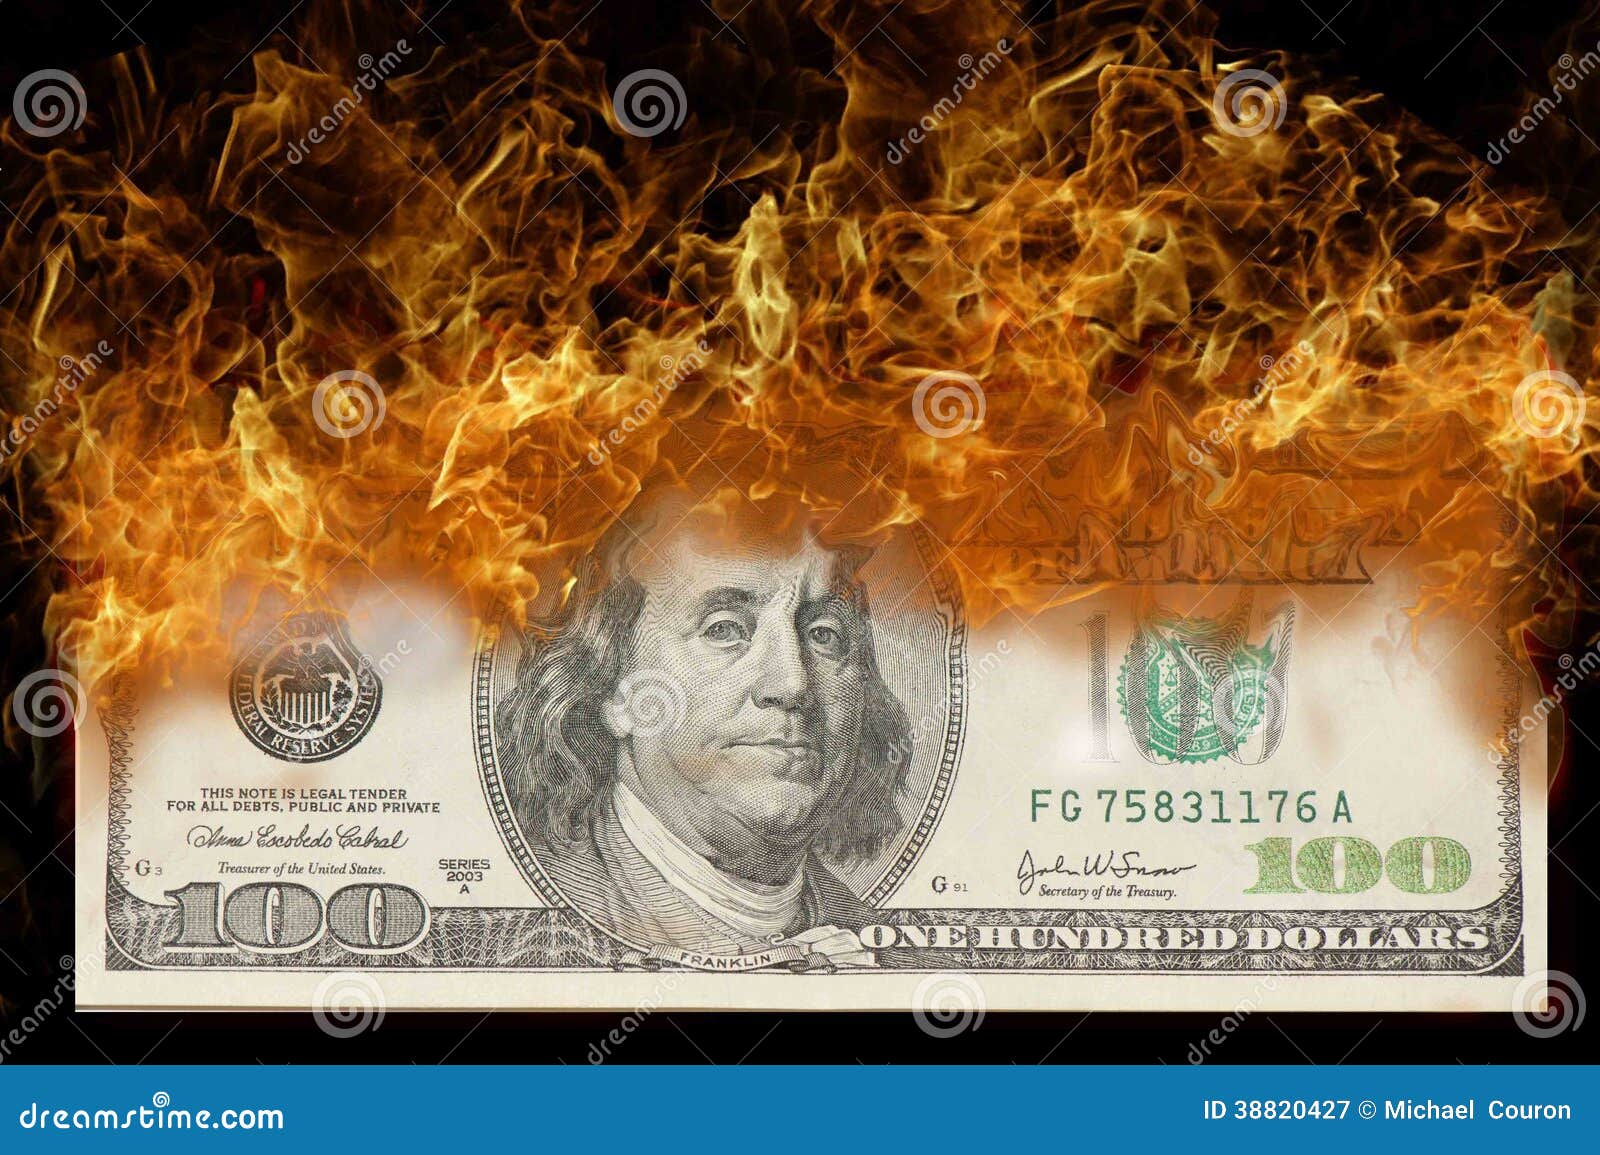 100 dollar bill on fire